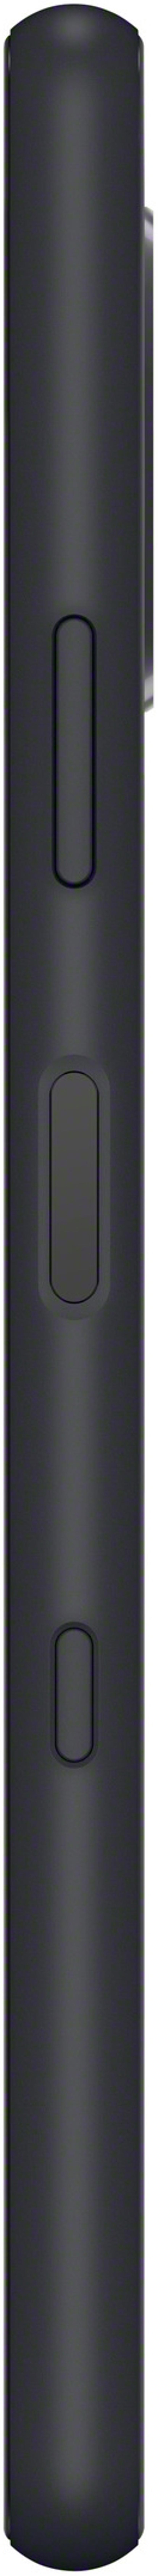 Sony XPERIA 10 III 128GB Dobbelt-SIM Svart